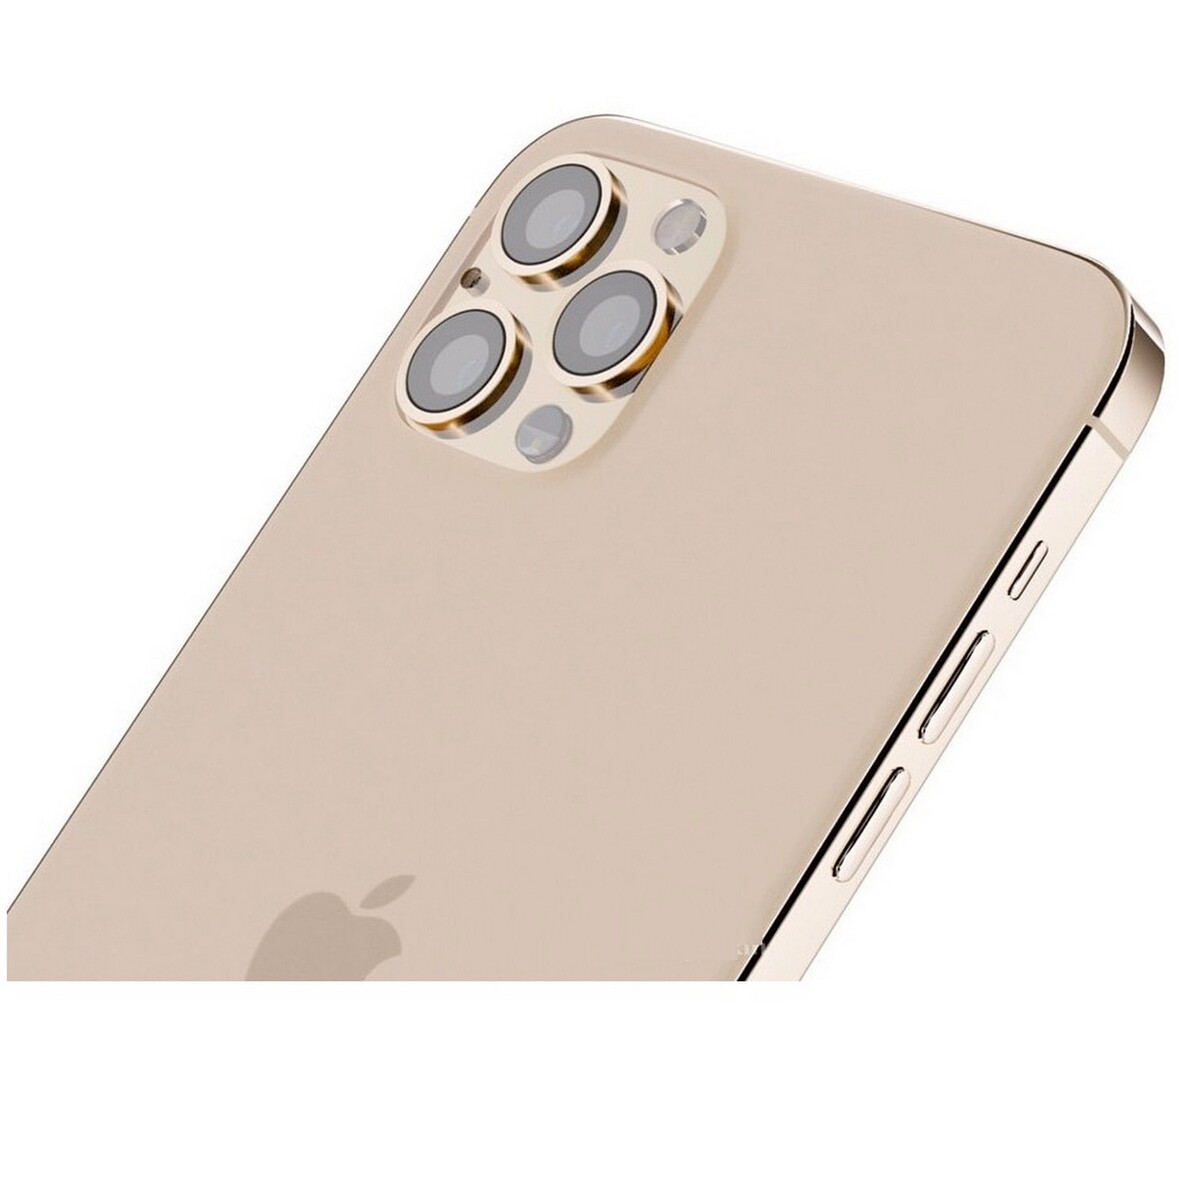 Buy Apple Iphone 12 Pro Max 256gb Gold Online Lulu Hypermarket India